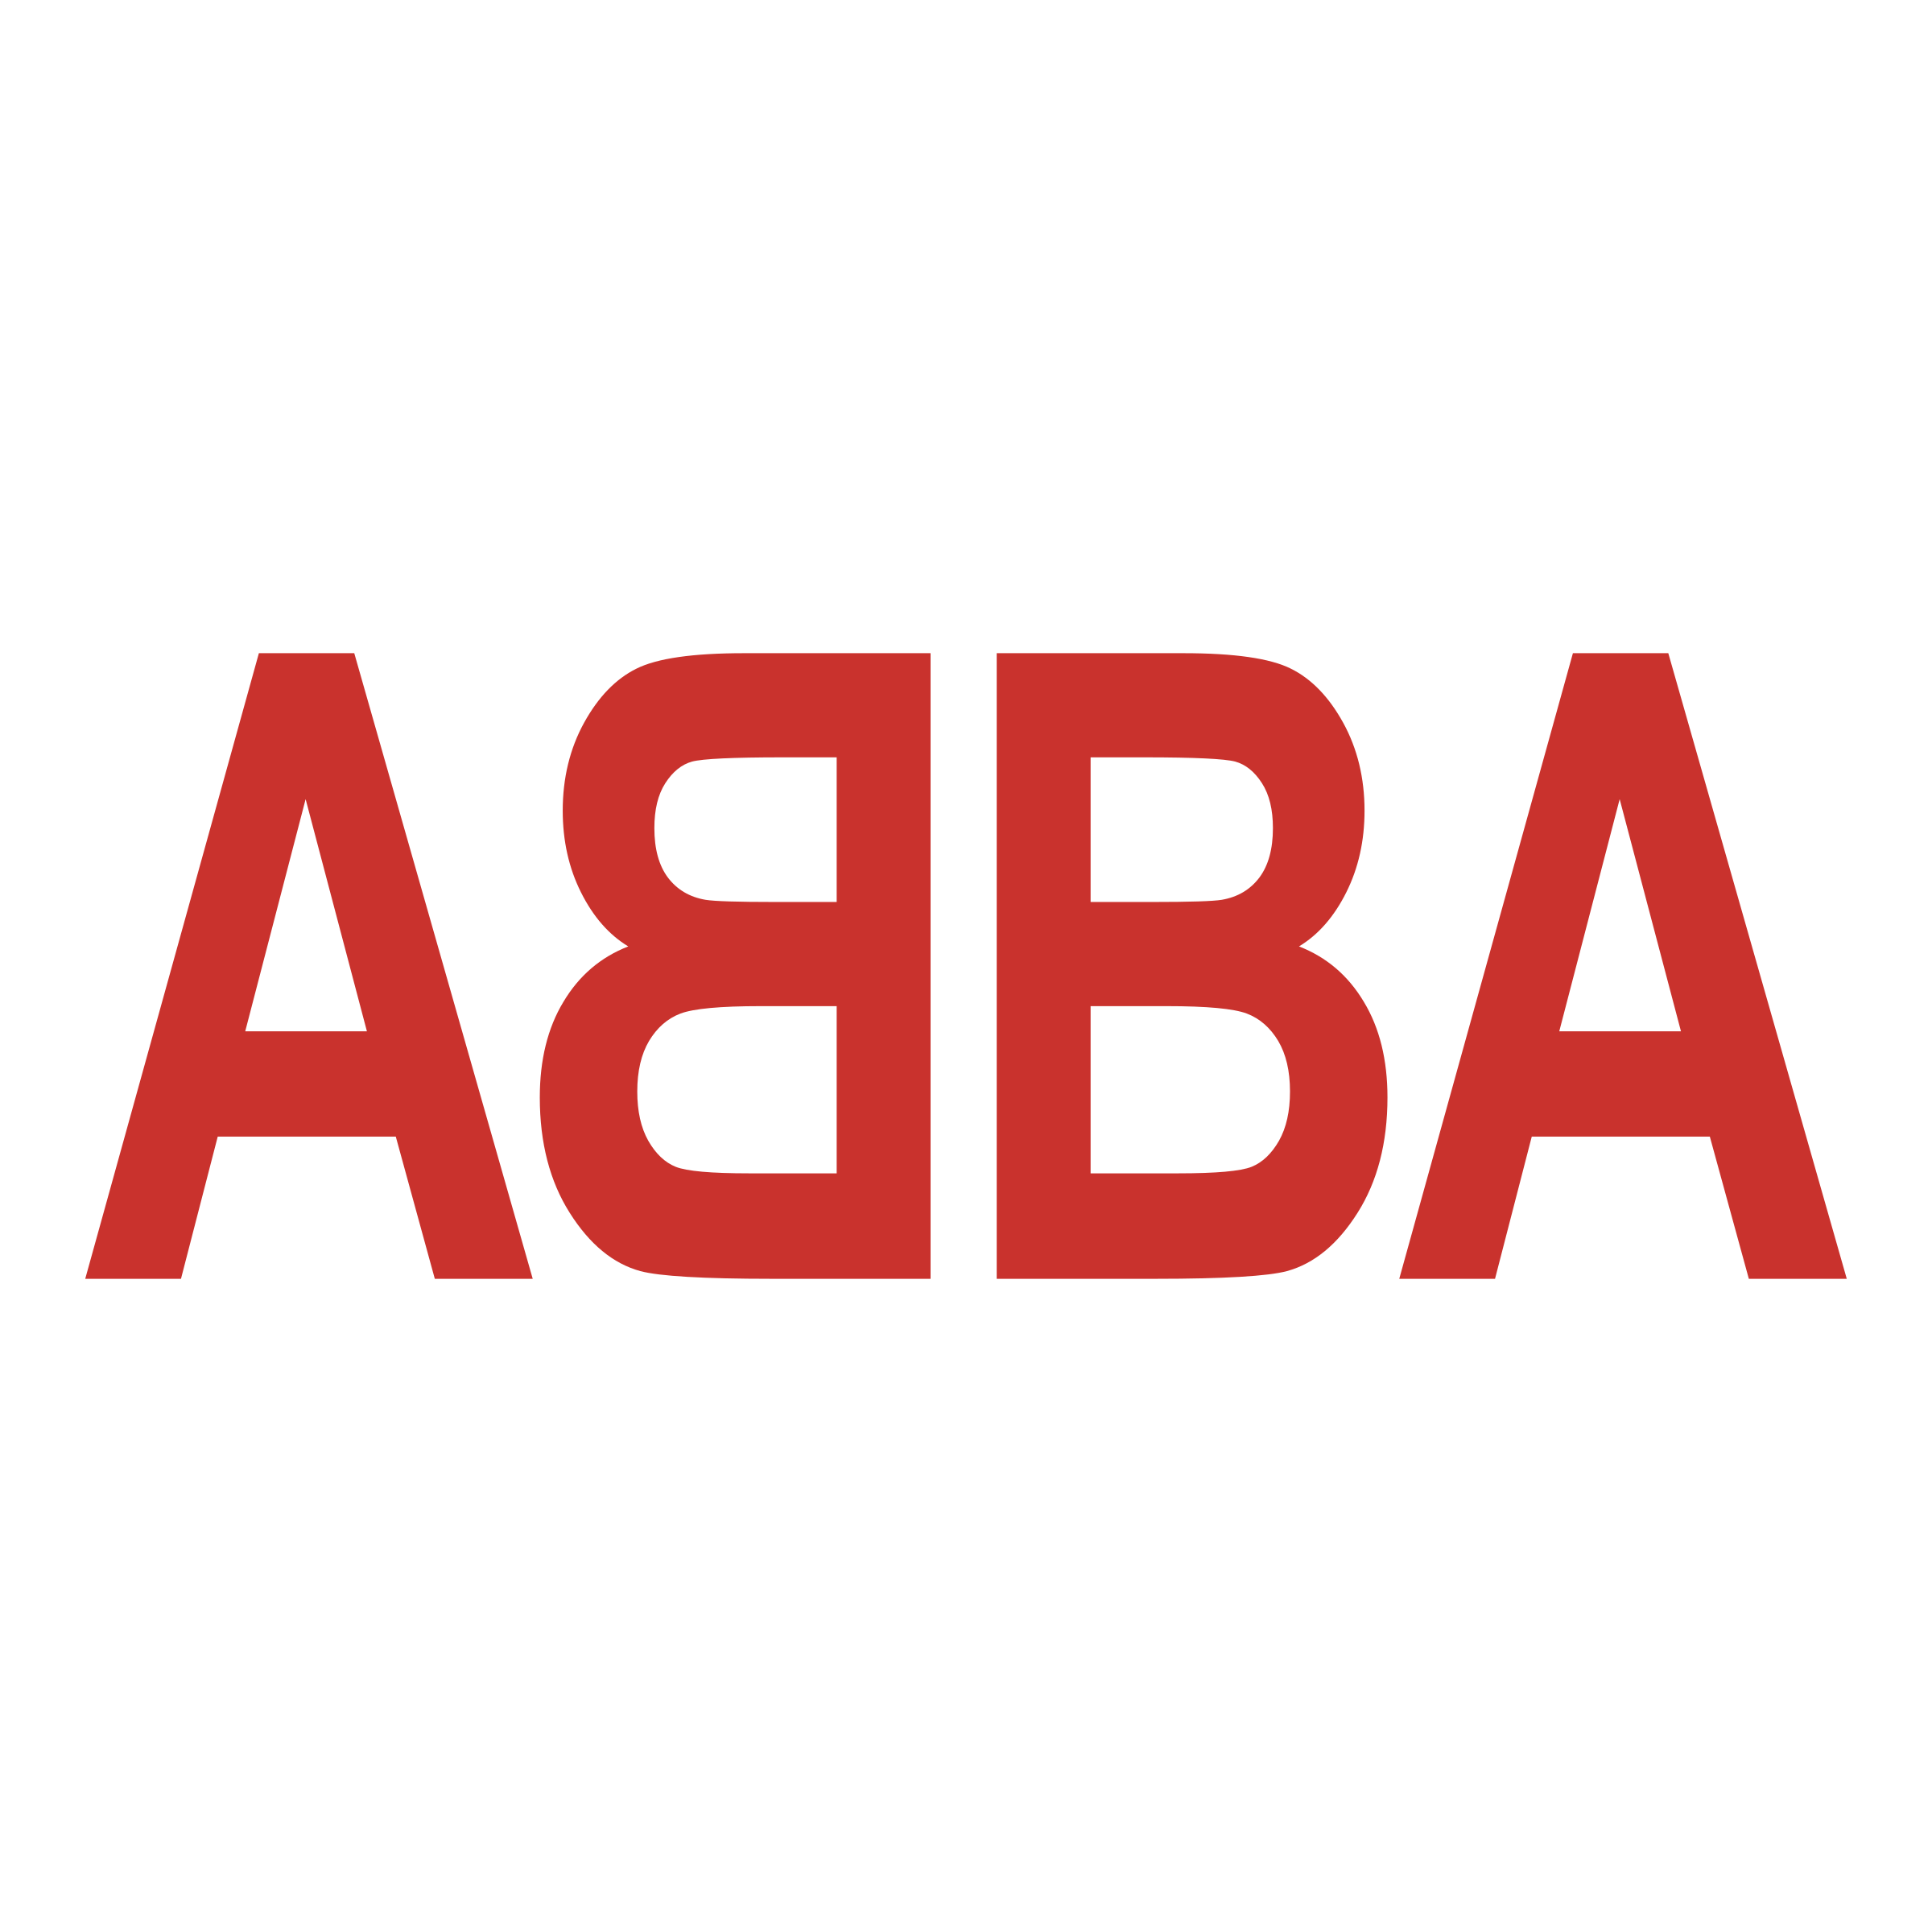 Abba Logo - ABBA Logo PNG Transparent & SVG Vector - Freebie Supply